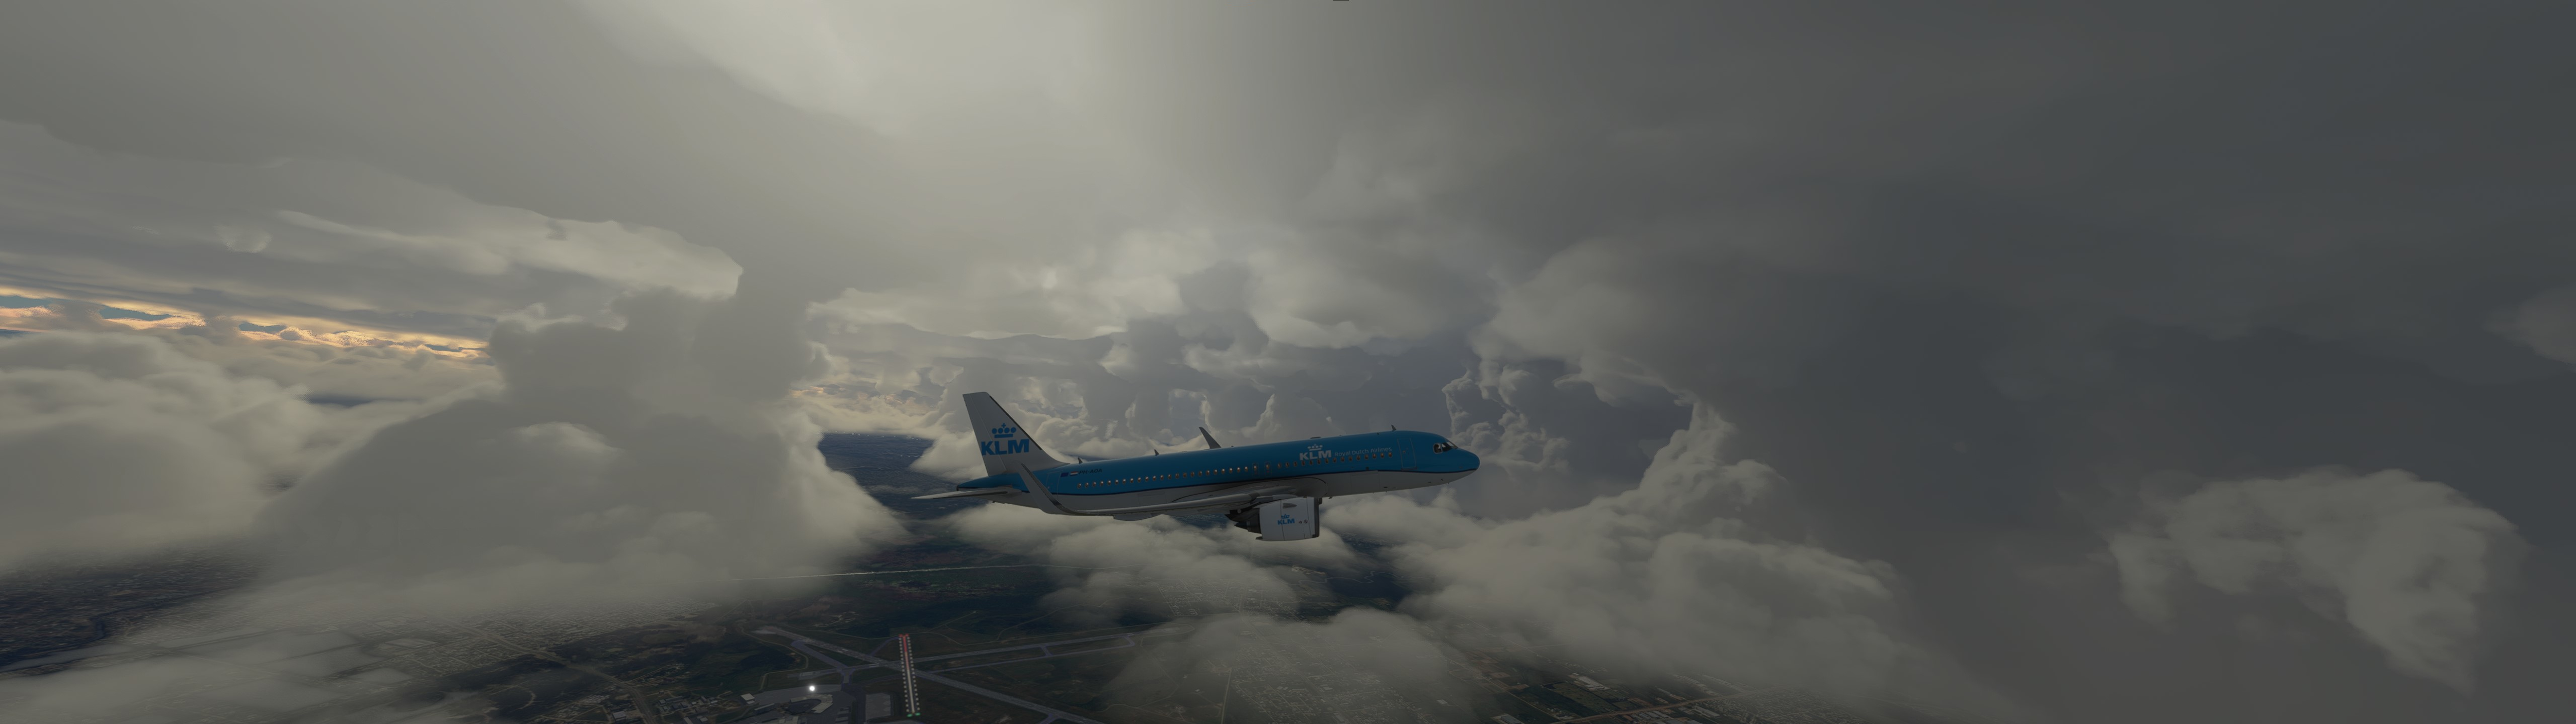 Airplane Aircraft Klm Airbus A320 Clouds Flight Simulator 5120x1440